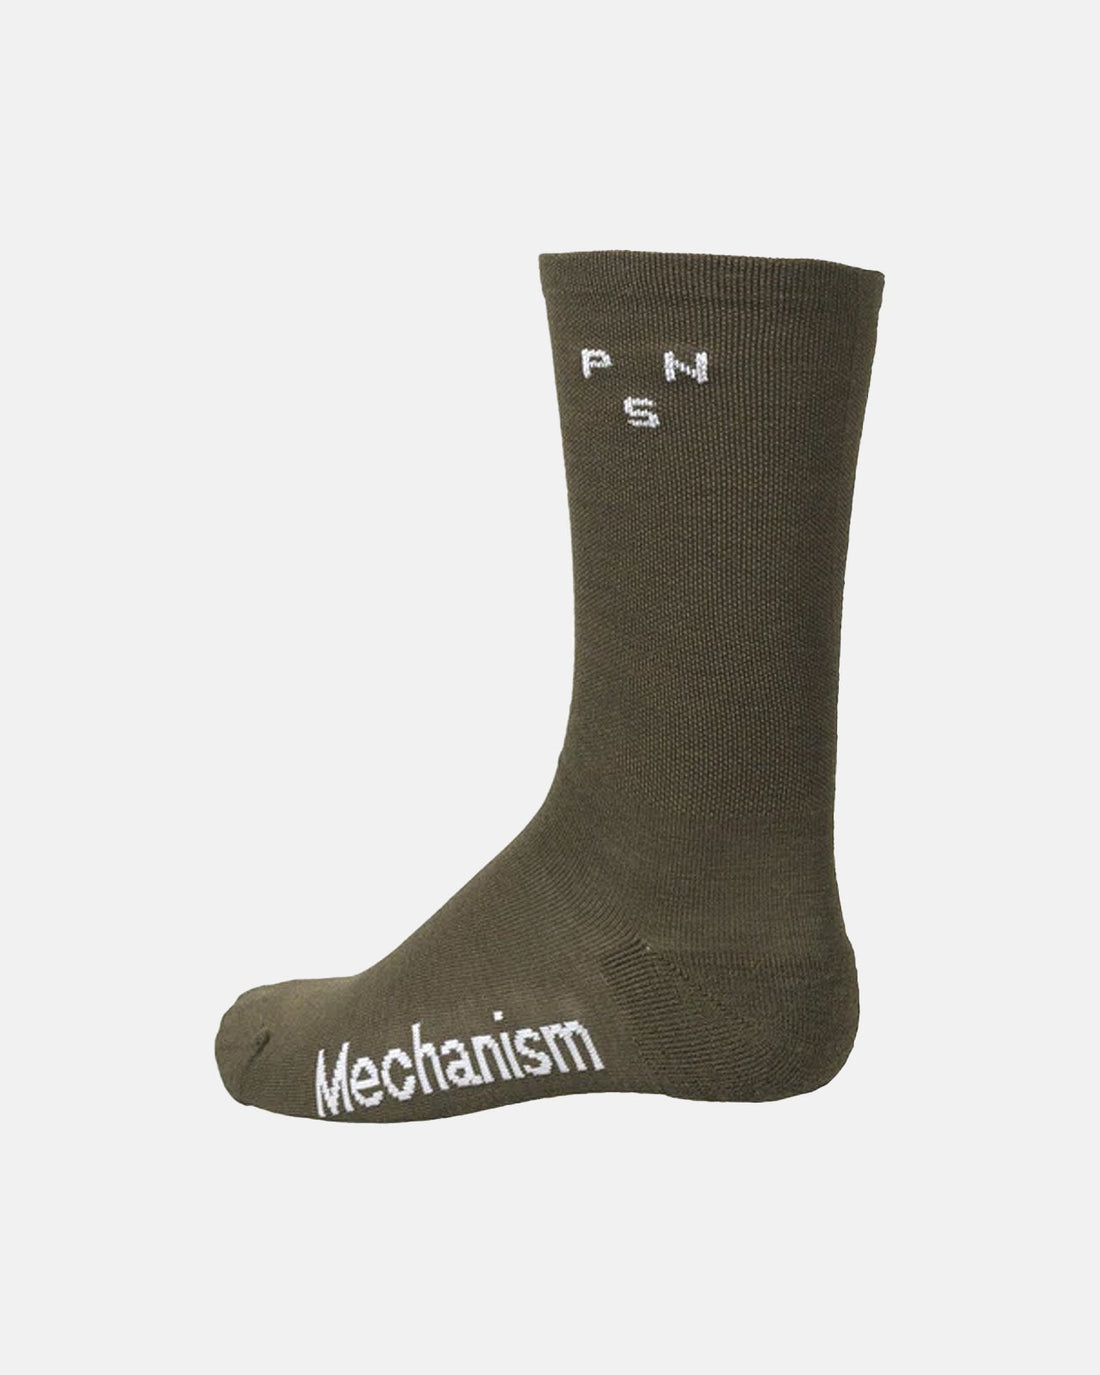 Mechanism Thermal Socks - Dark Olive - Pas Normal Studios